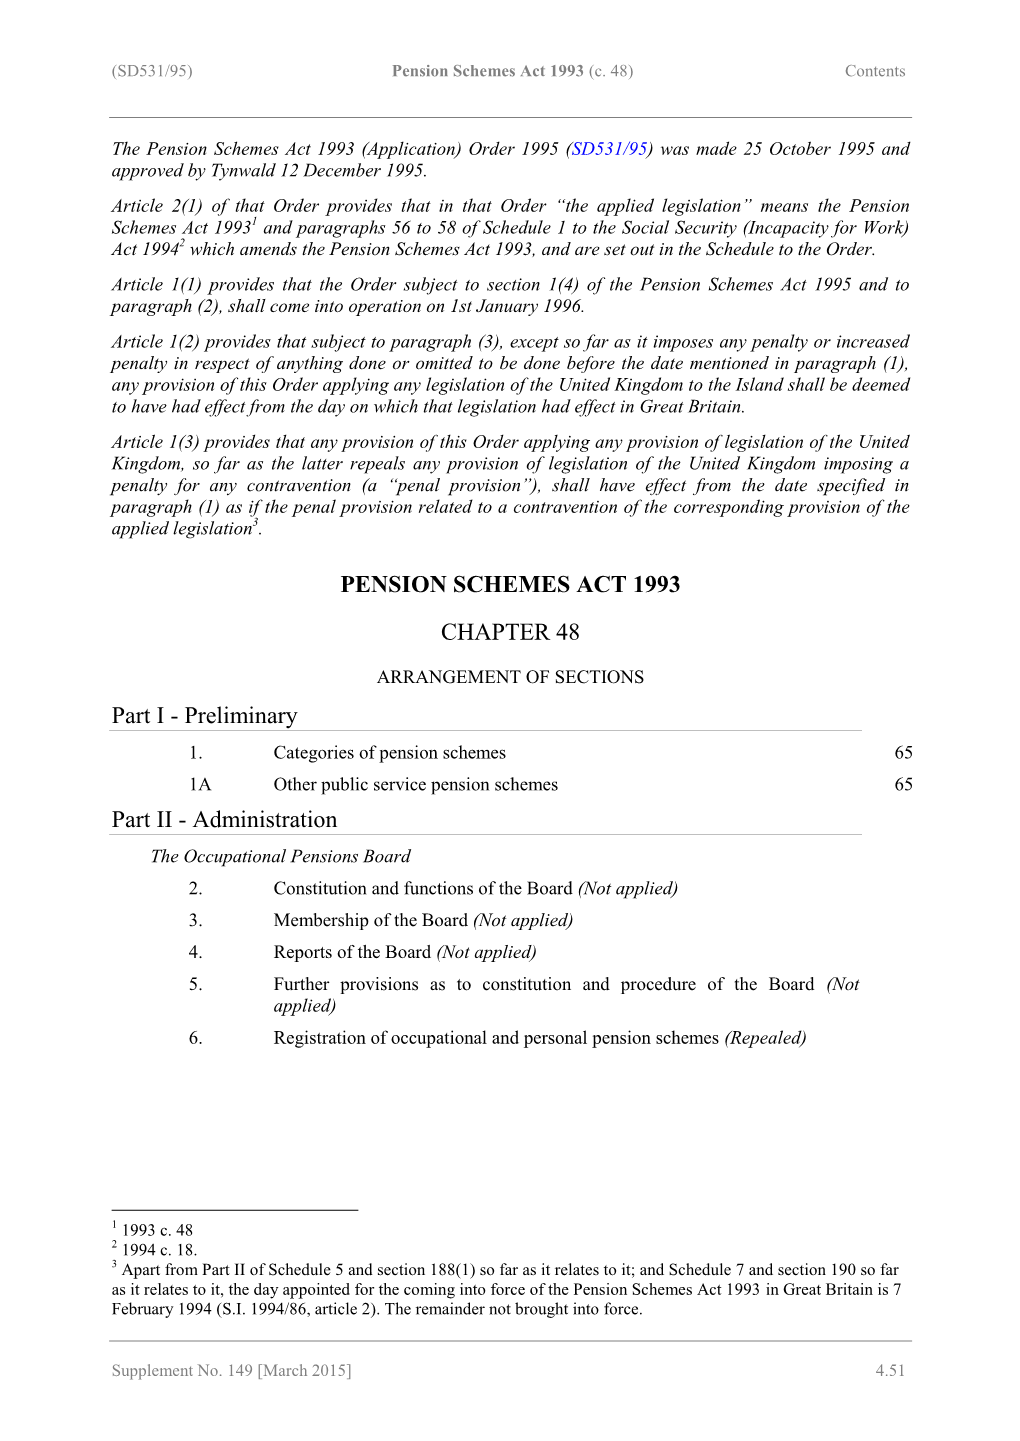 Pension Schemes Act 1993 (C